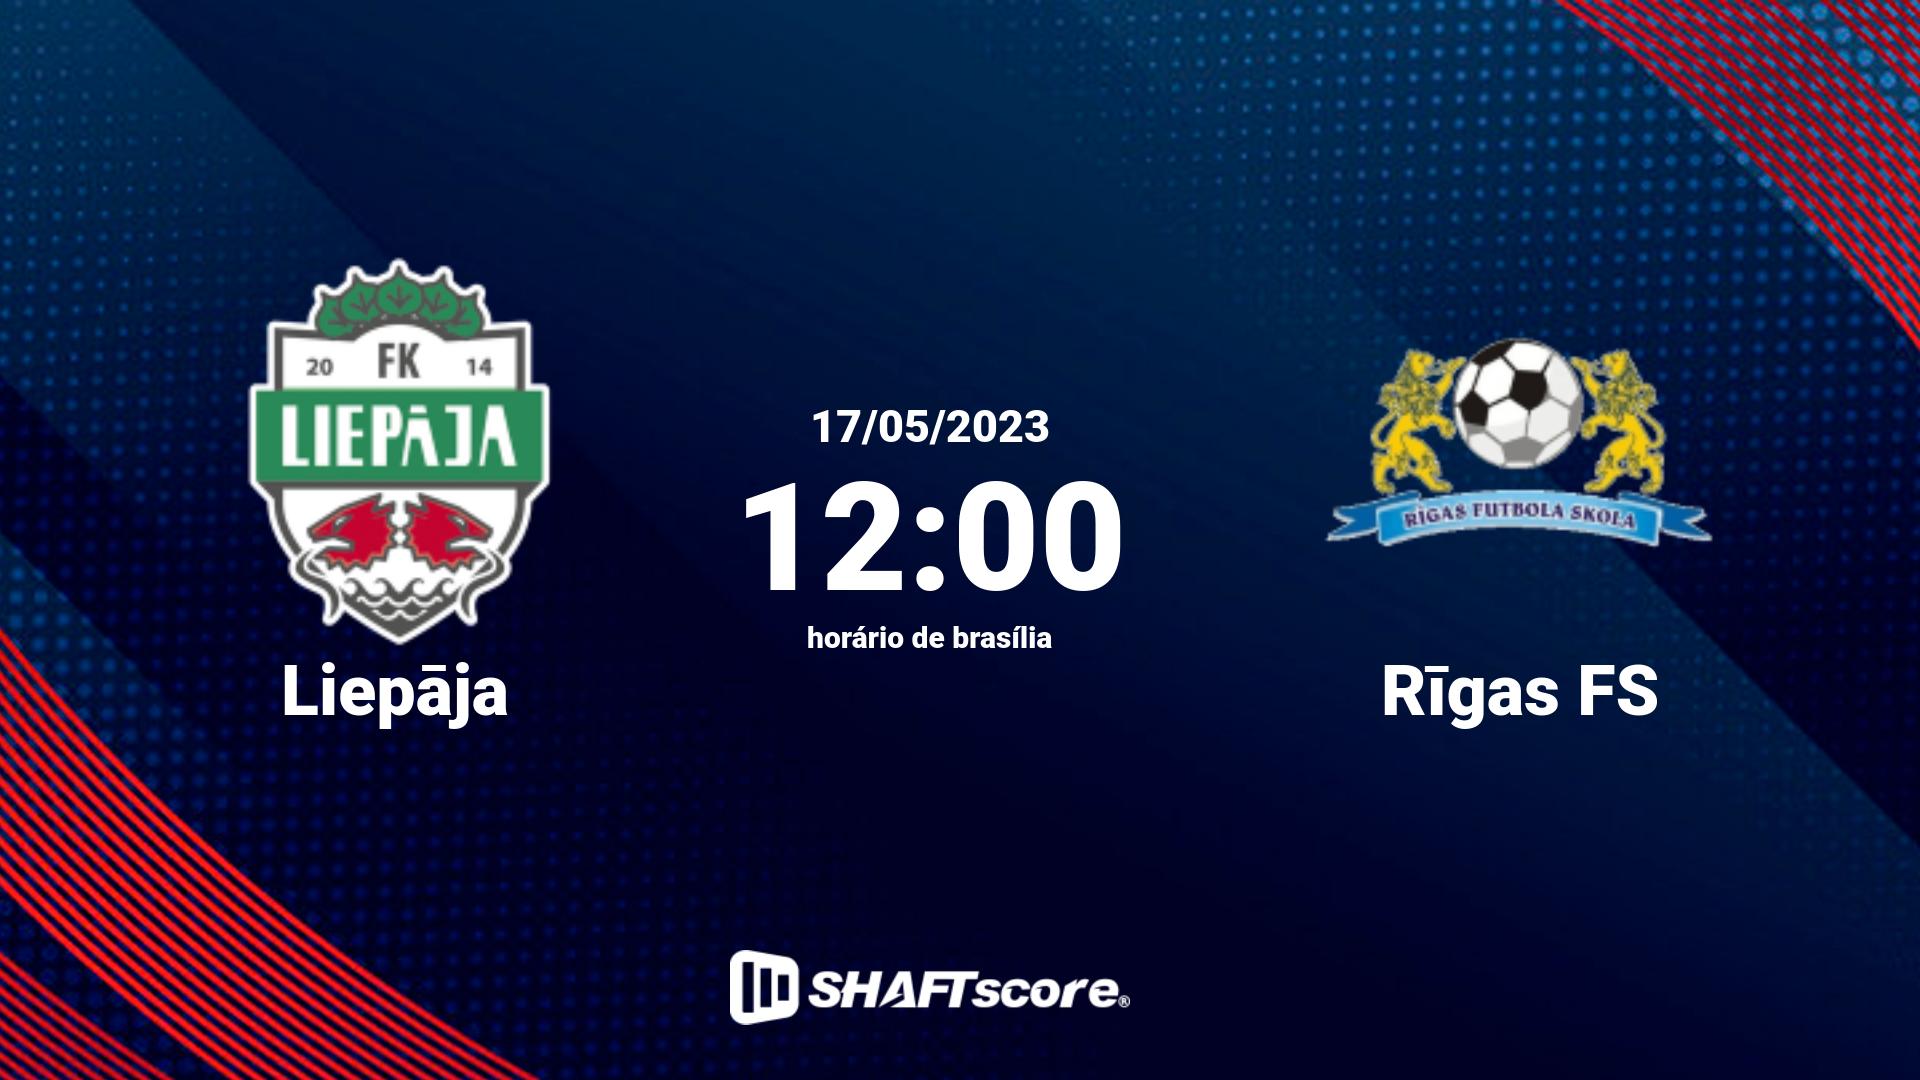 Estatísticas do jogo Liepāja vs Rīgas FS 17.05 12:00